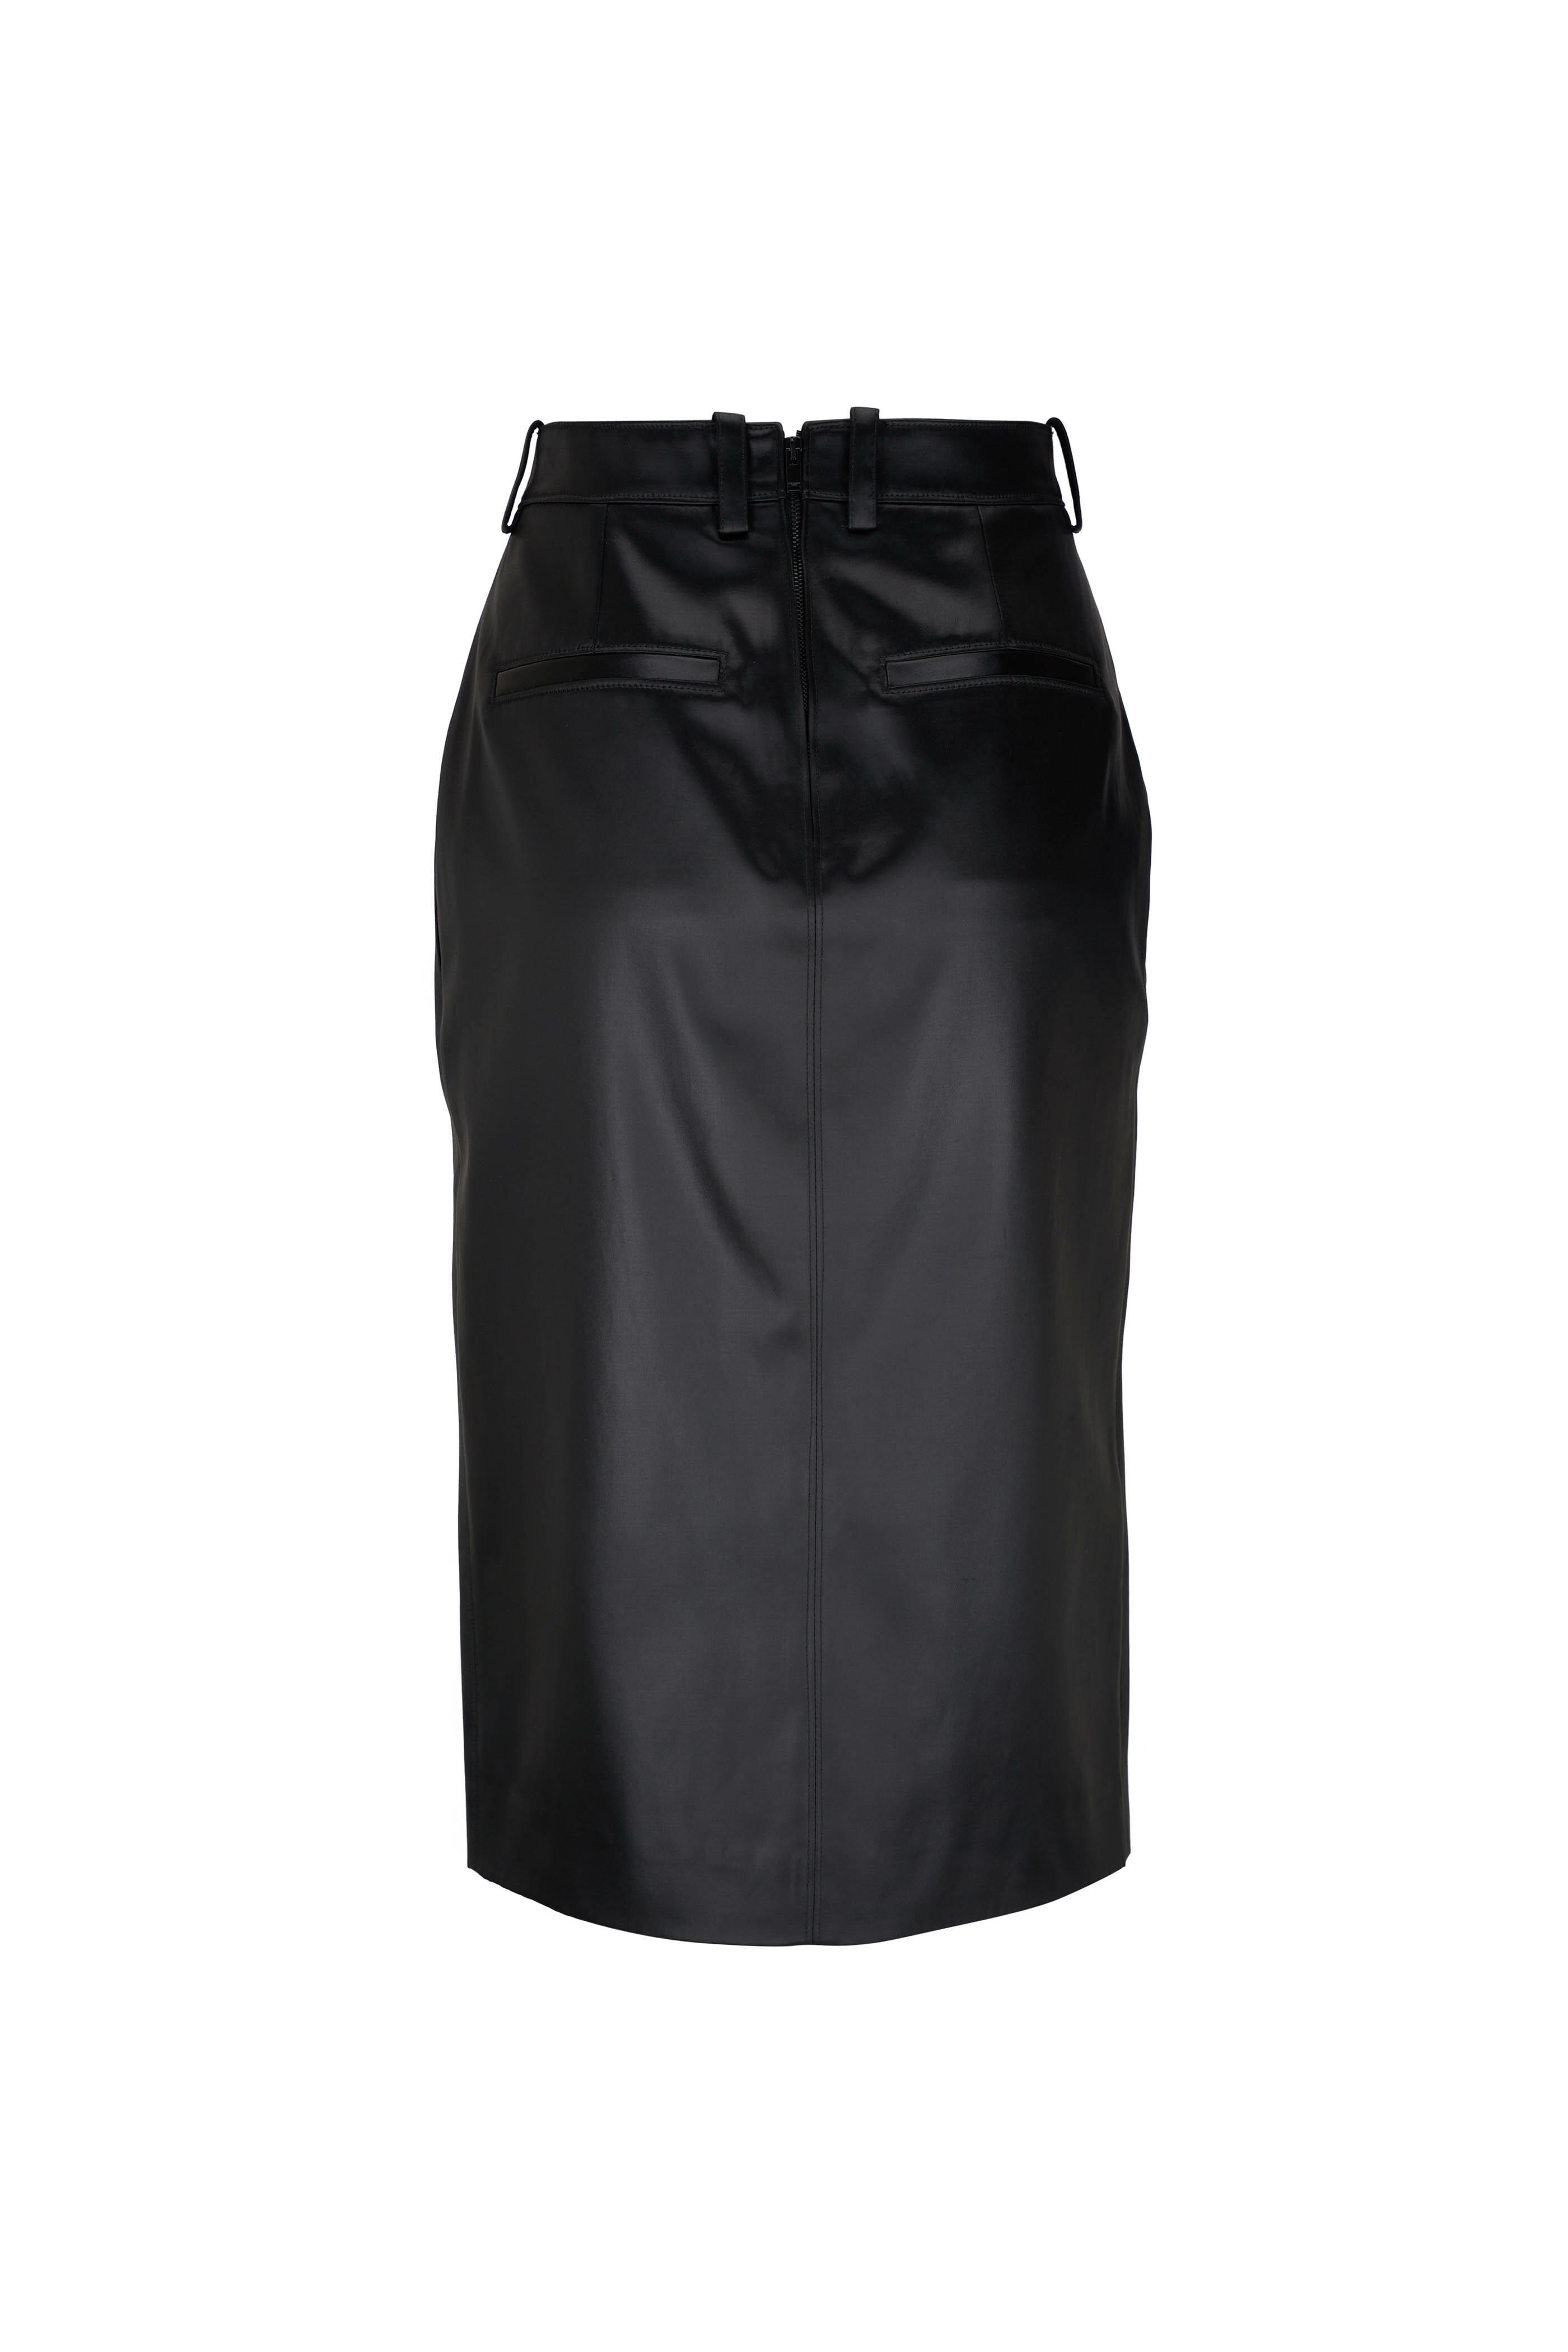 Saint Laurent elasticated-waistband pencil skirt - Black